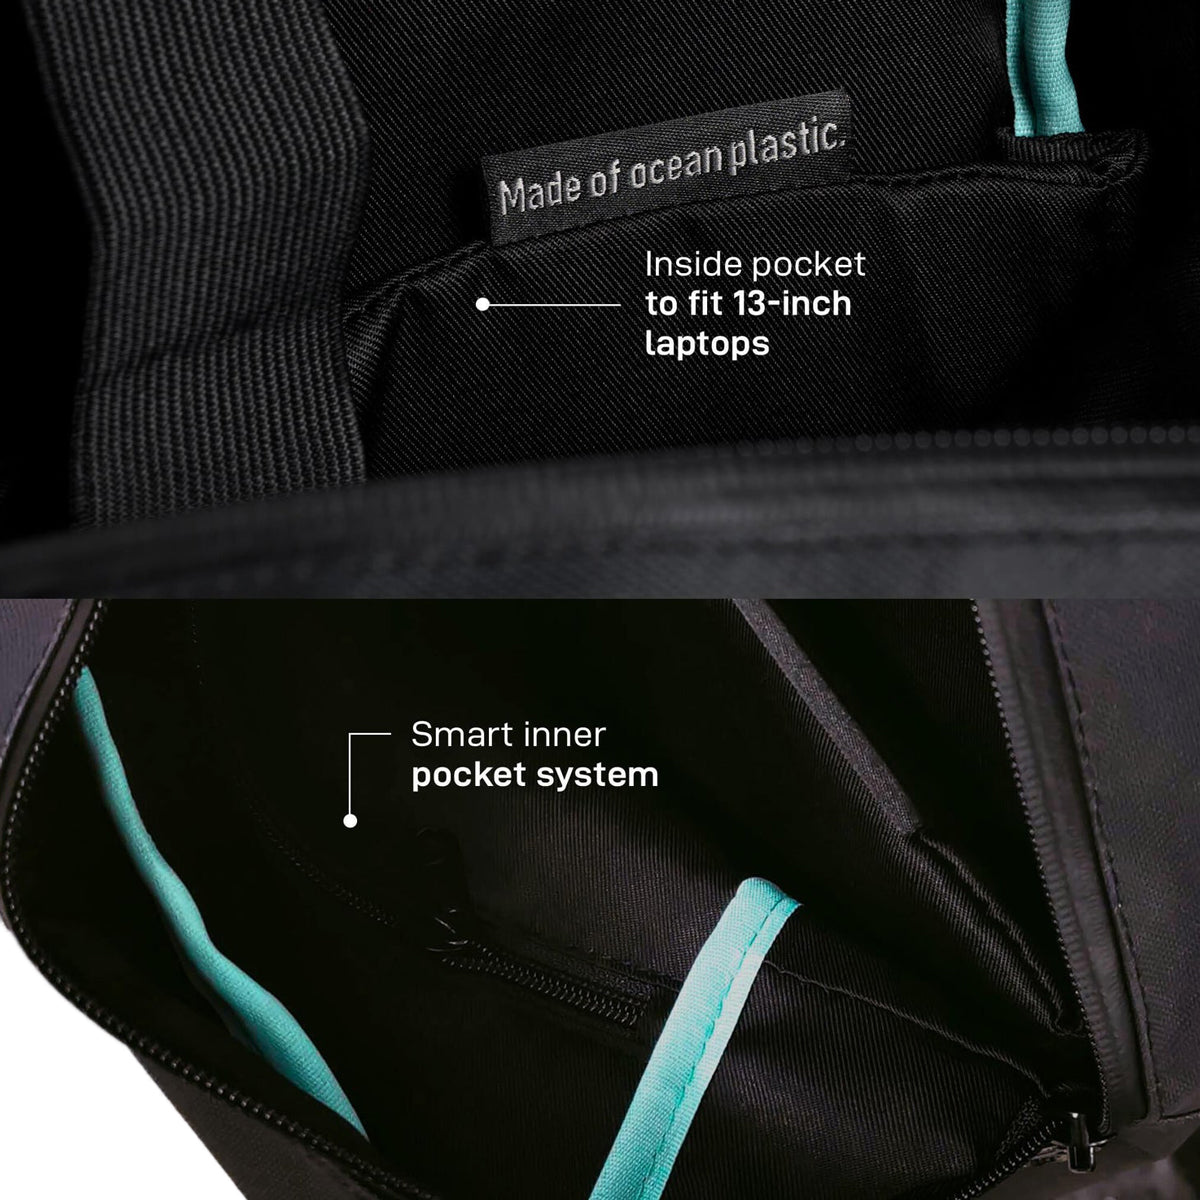 New Original for XIAOMI MI City Sling Bag Waterproof Unisex